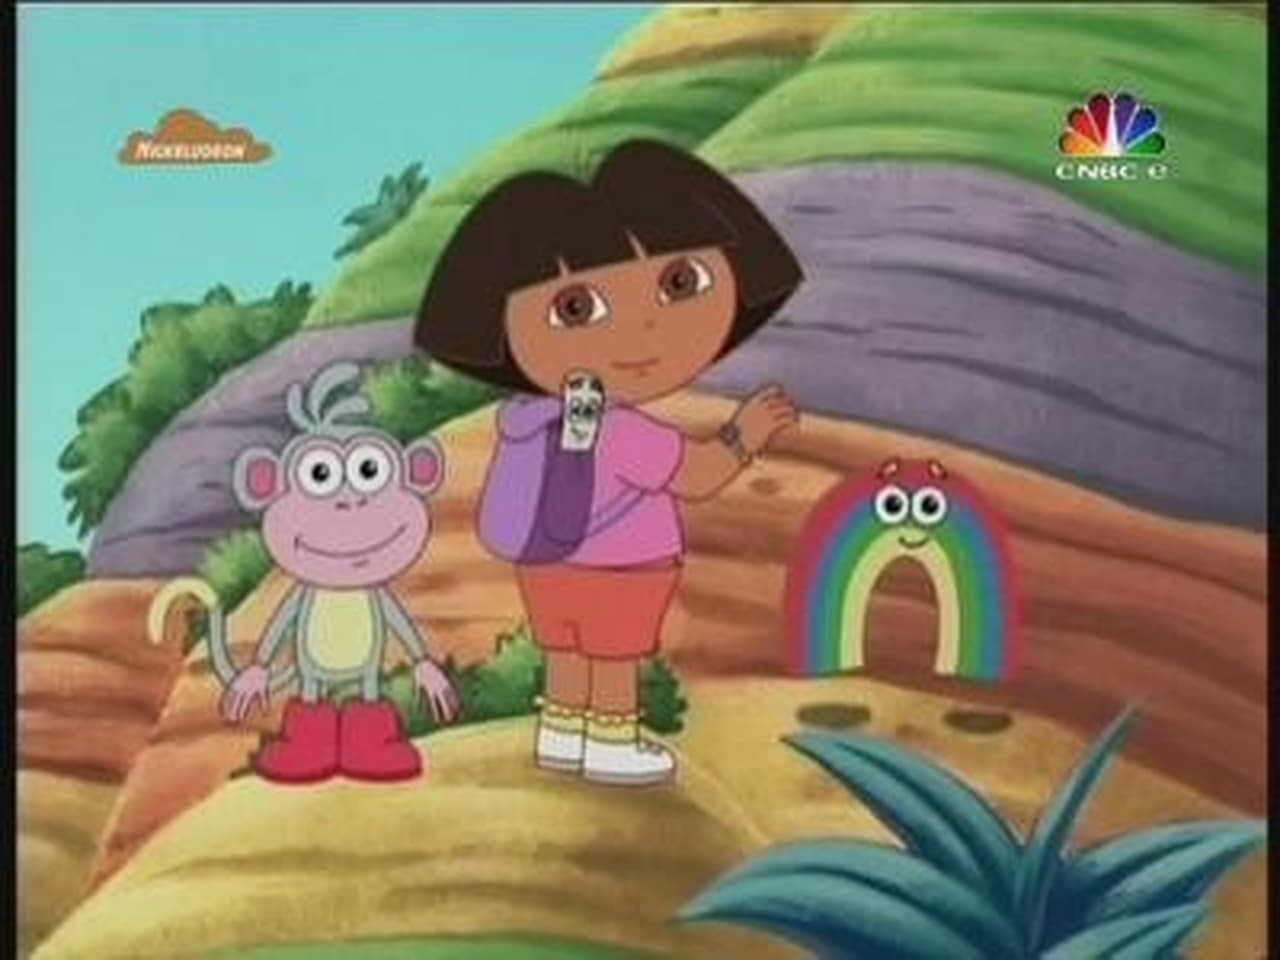 Dora the Explorer Season 4 Episode 5 (Egg Hunt) Images & Pictures. 